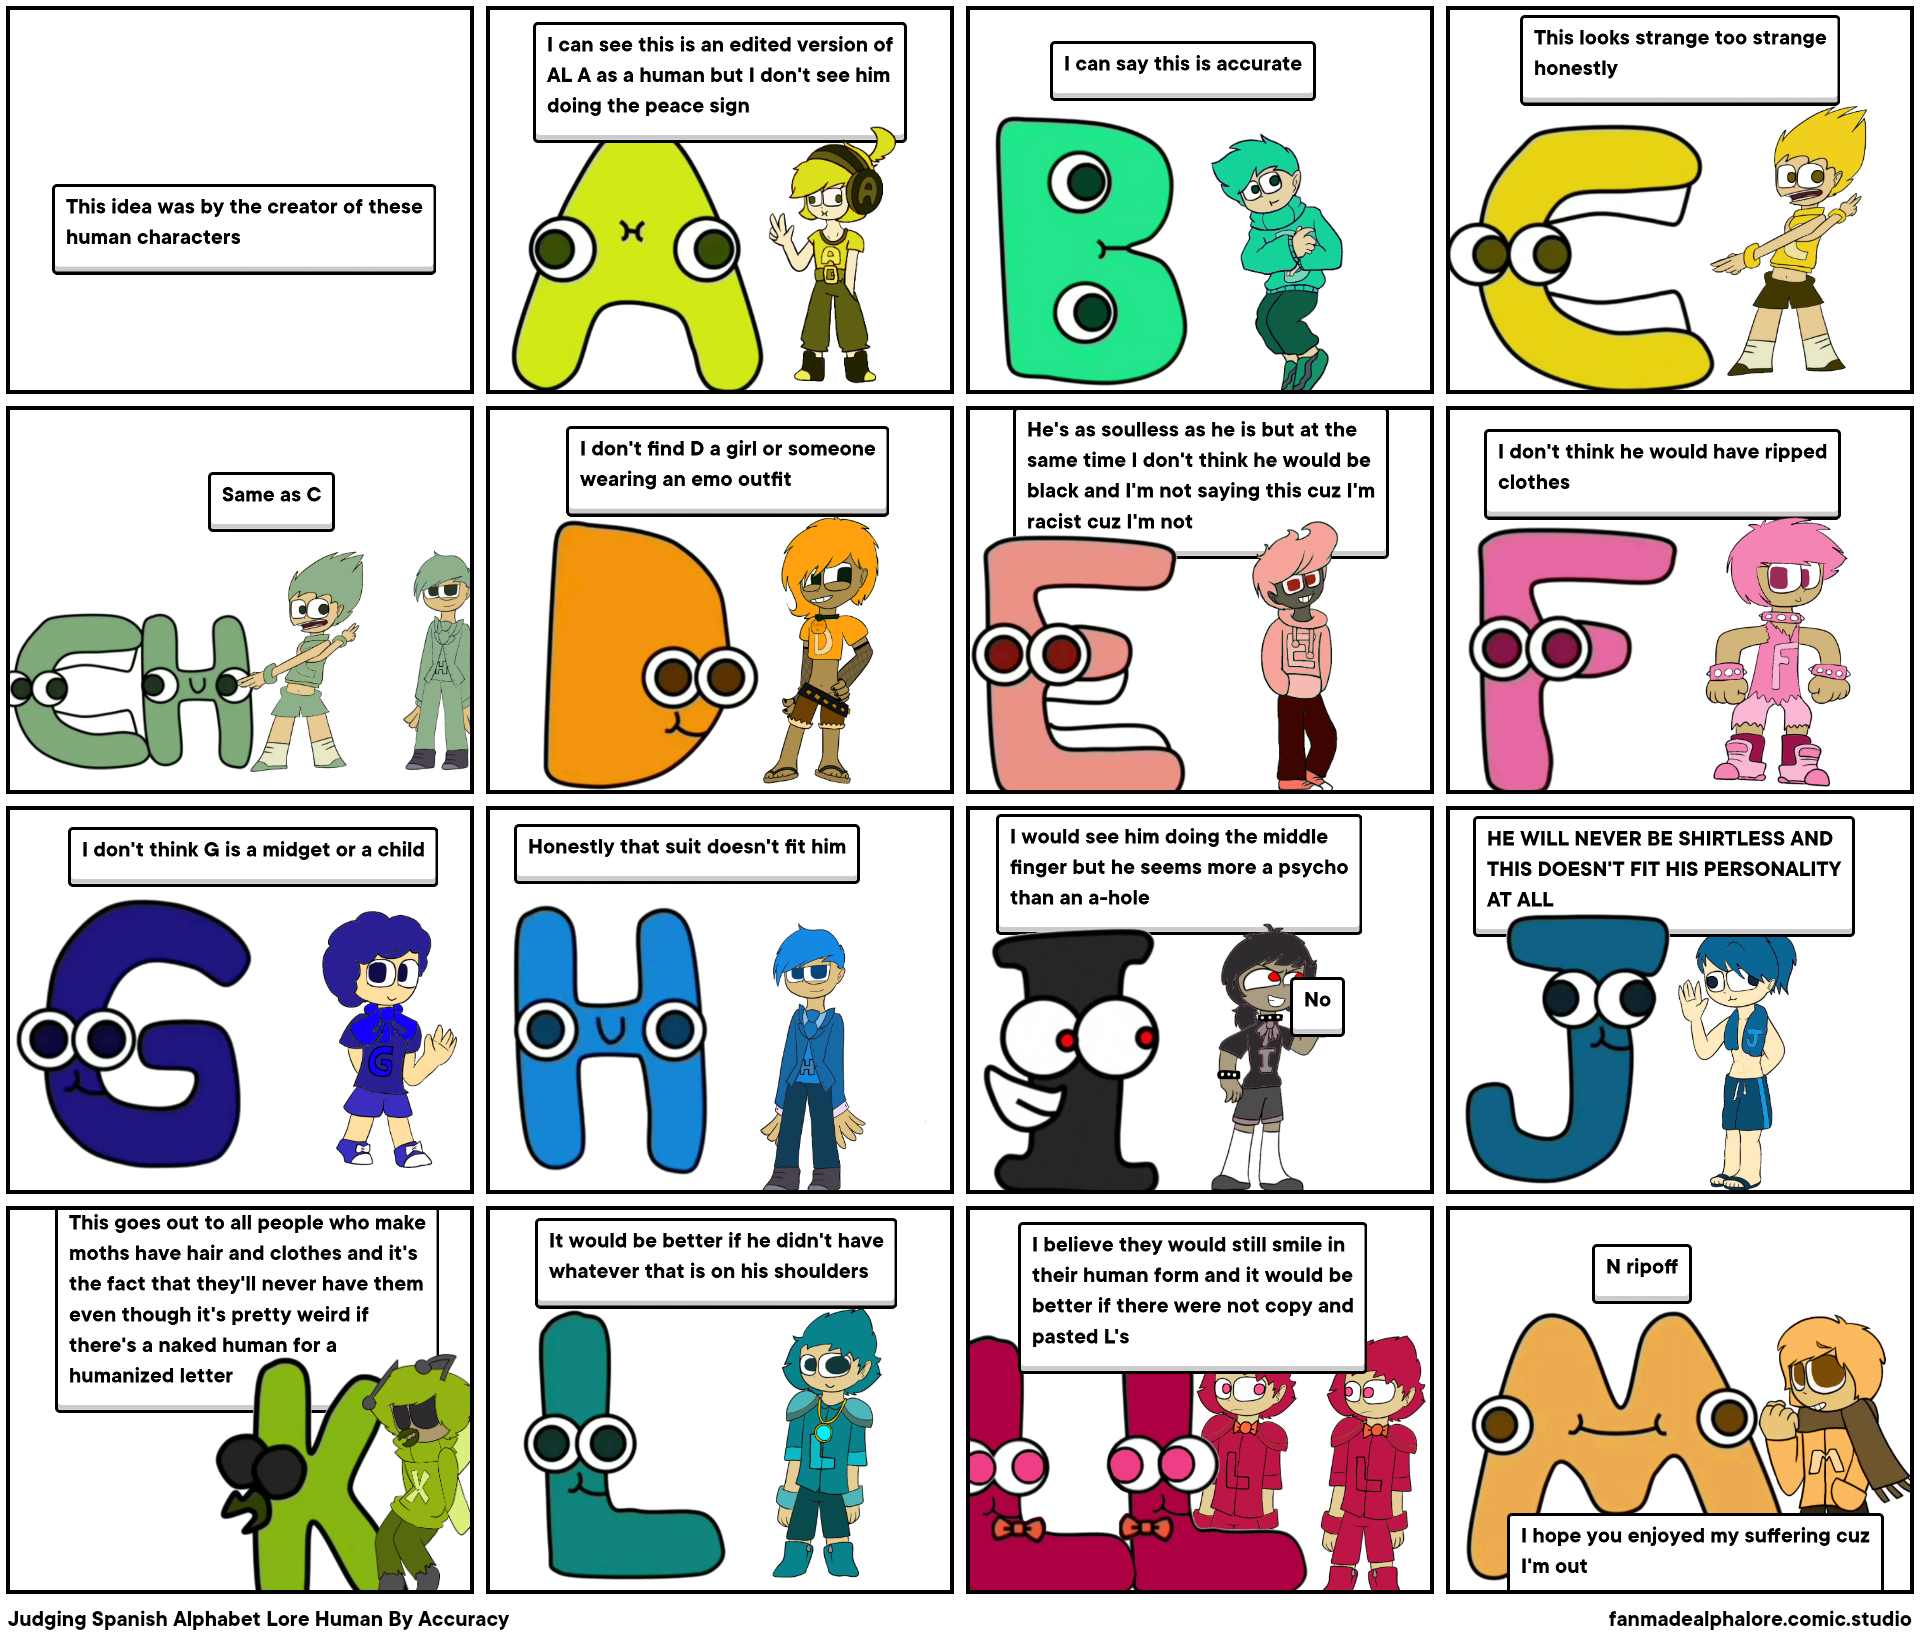 Judging Spanish Alphabet Lore Human By Accuracy - Comic Studio